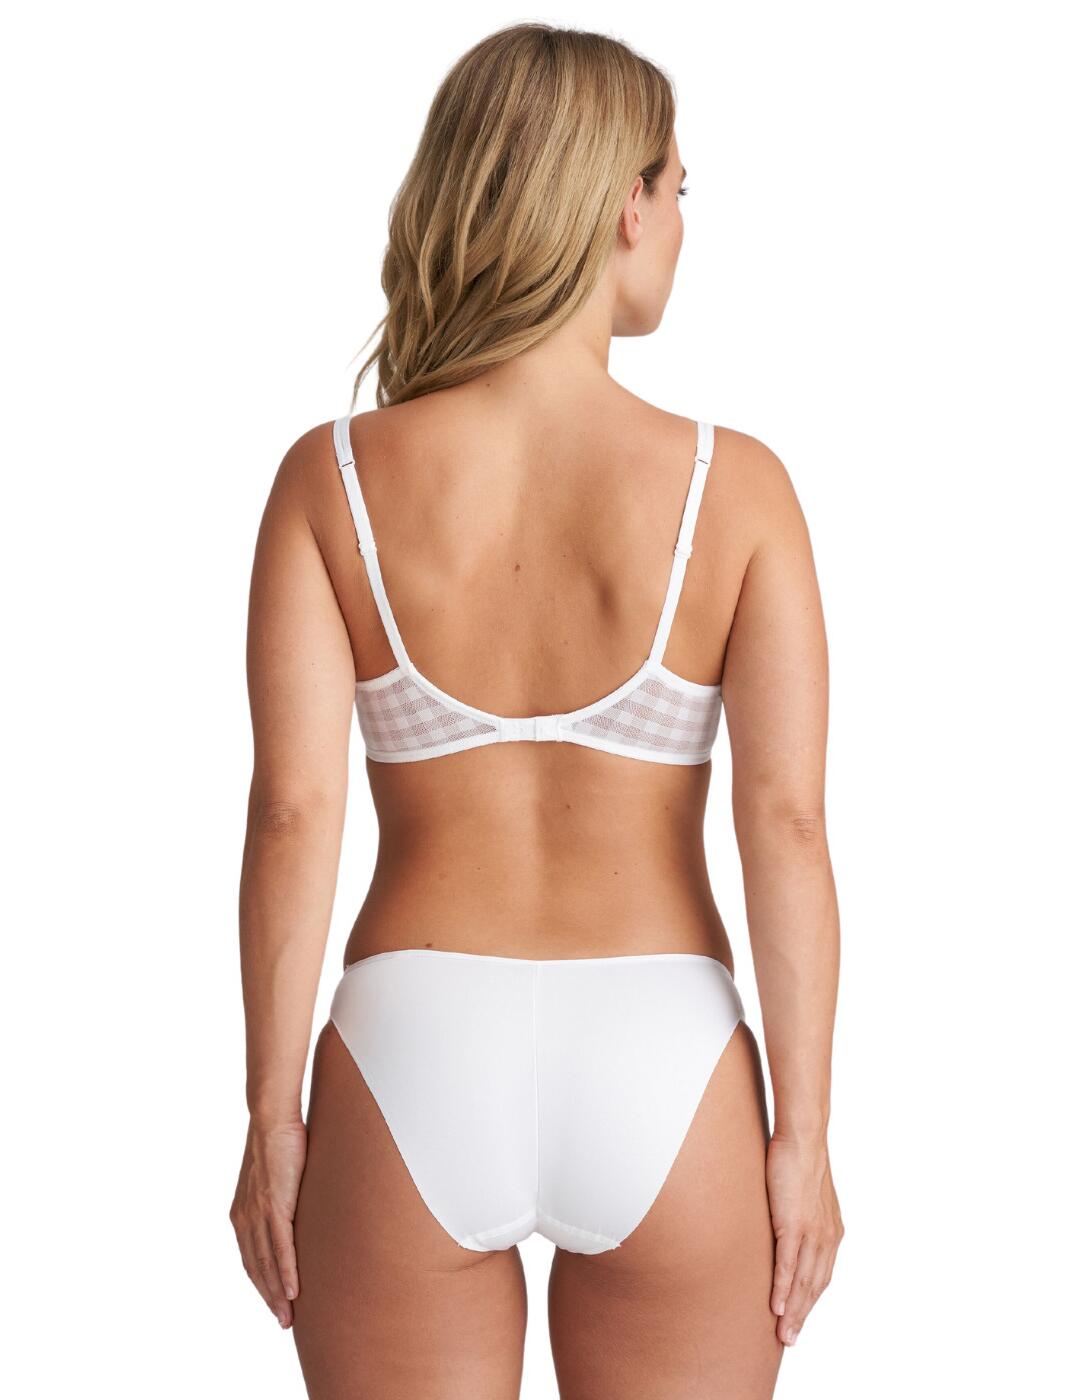 BNWT LADIES TESCO Bra Size 34B Lingerie Underwear £4.00 - PicClick UK